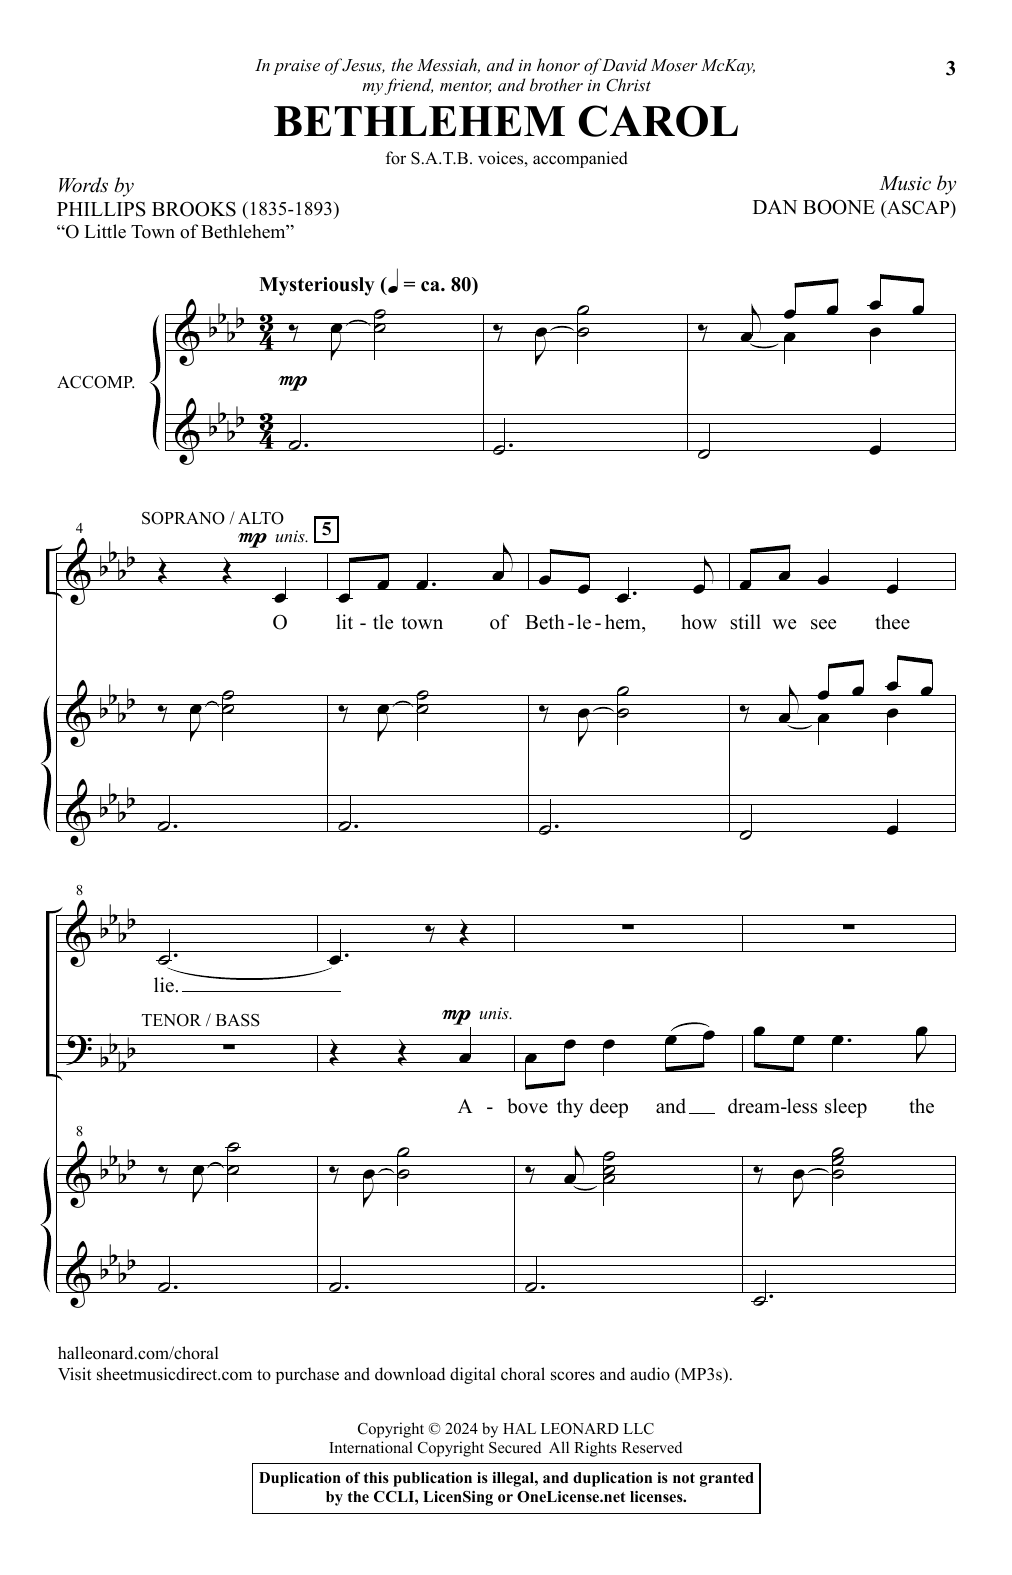 Dan Boone Bethlehem Carol sheet music notes and chords arranged for SATB Choir